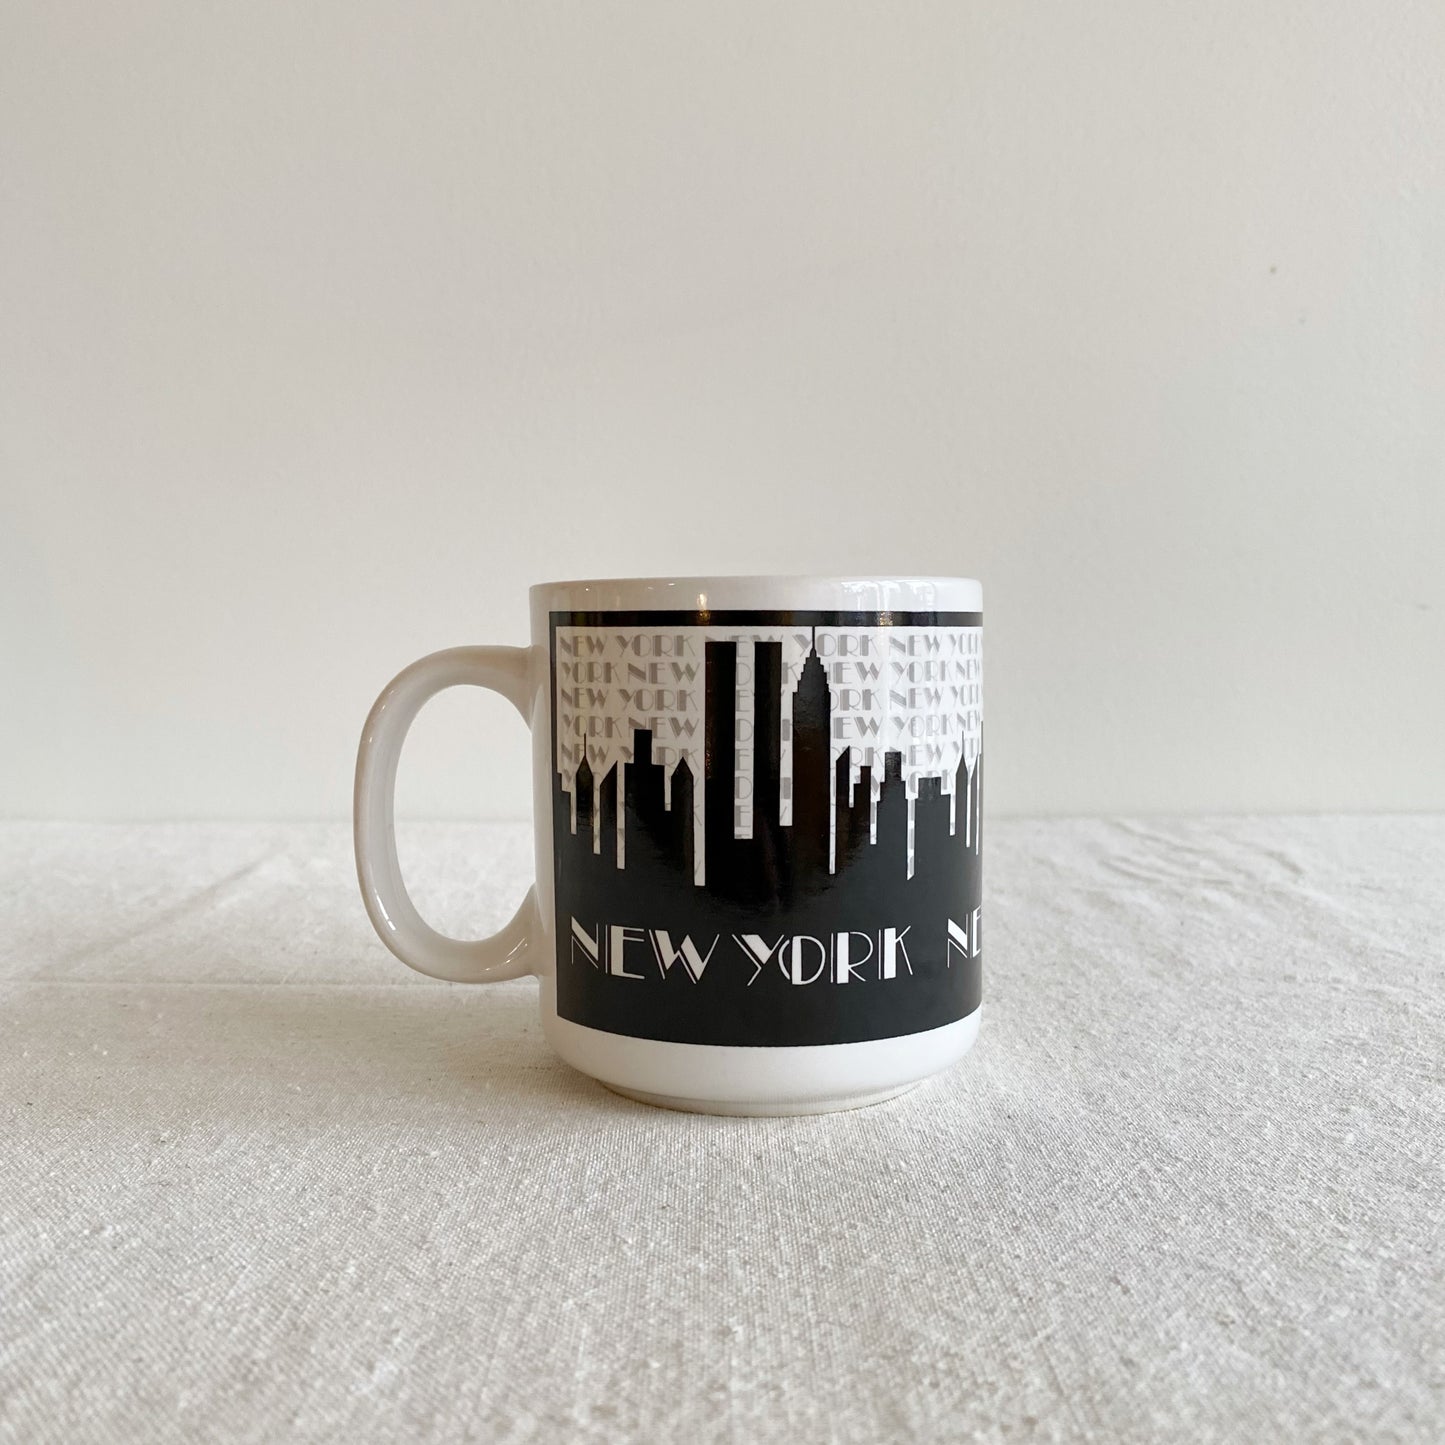 1980’s Vintage New York Mug